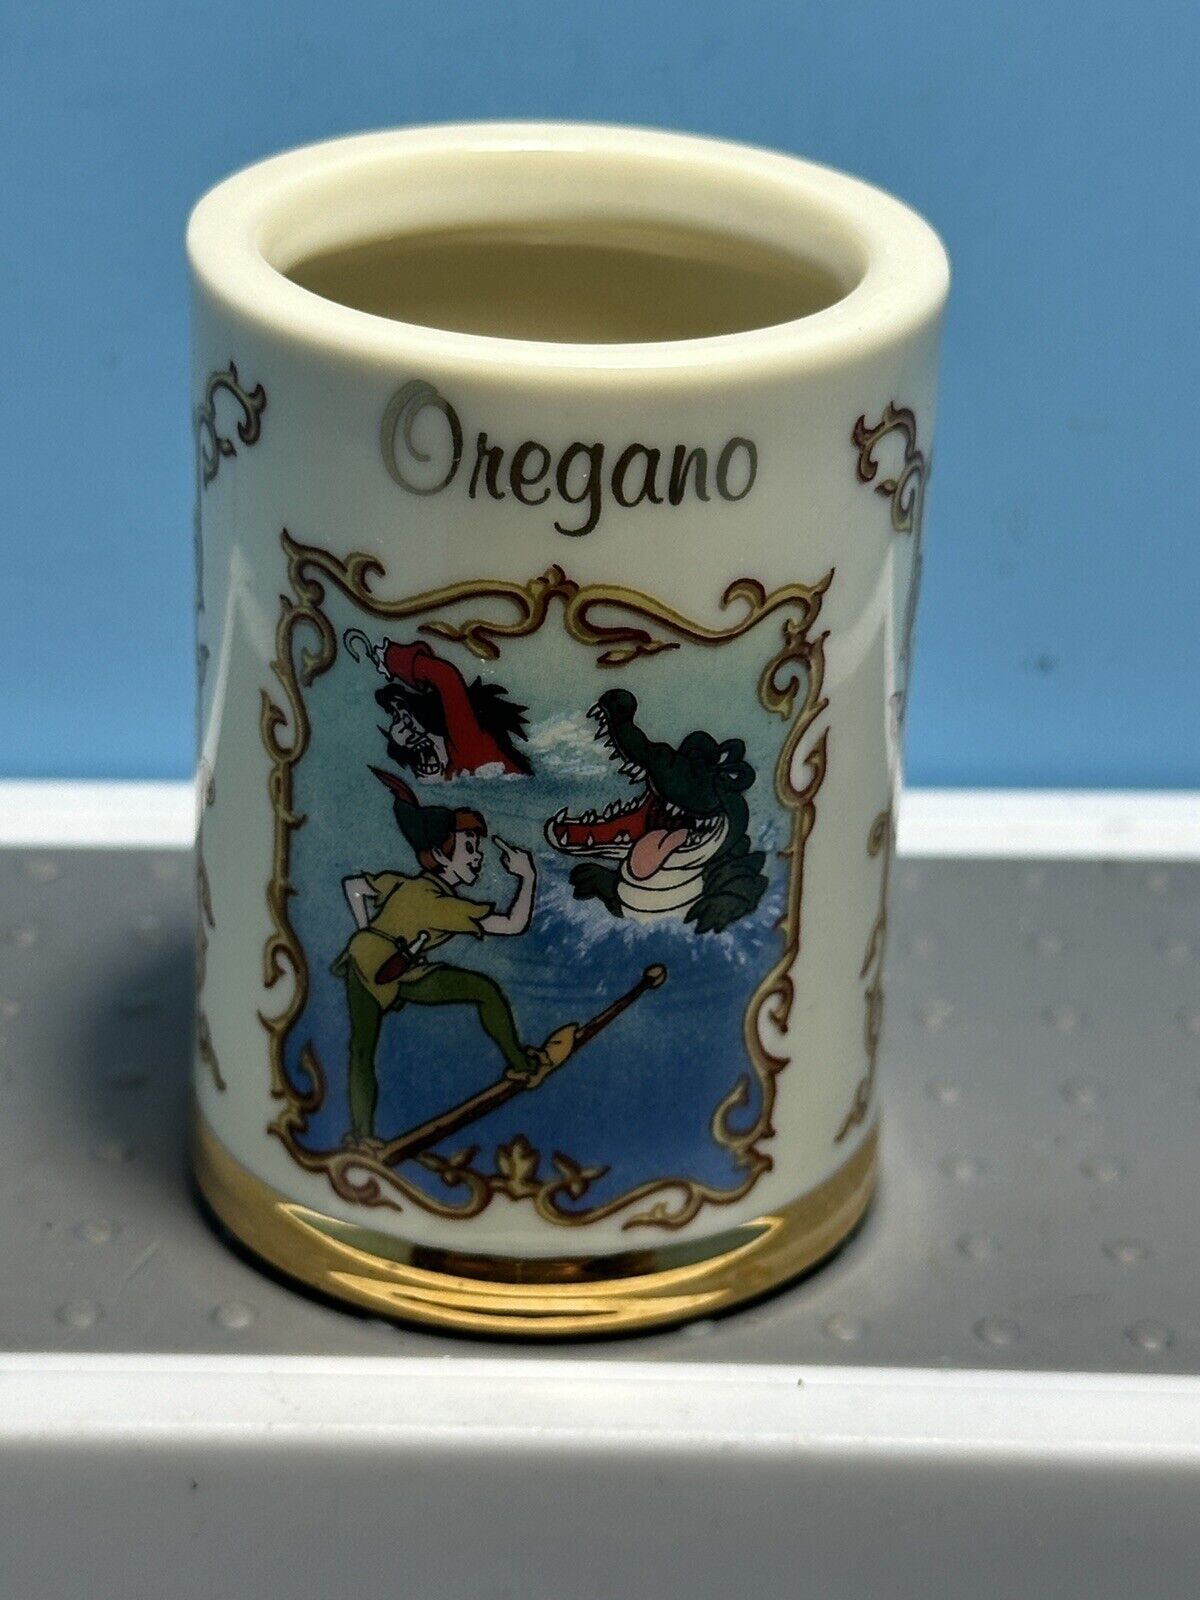 Vintage Lenox Disney 1995 Spice Jar Collection: Oregano - Peter Pan - JAR ONLY